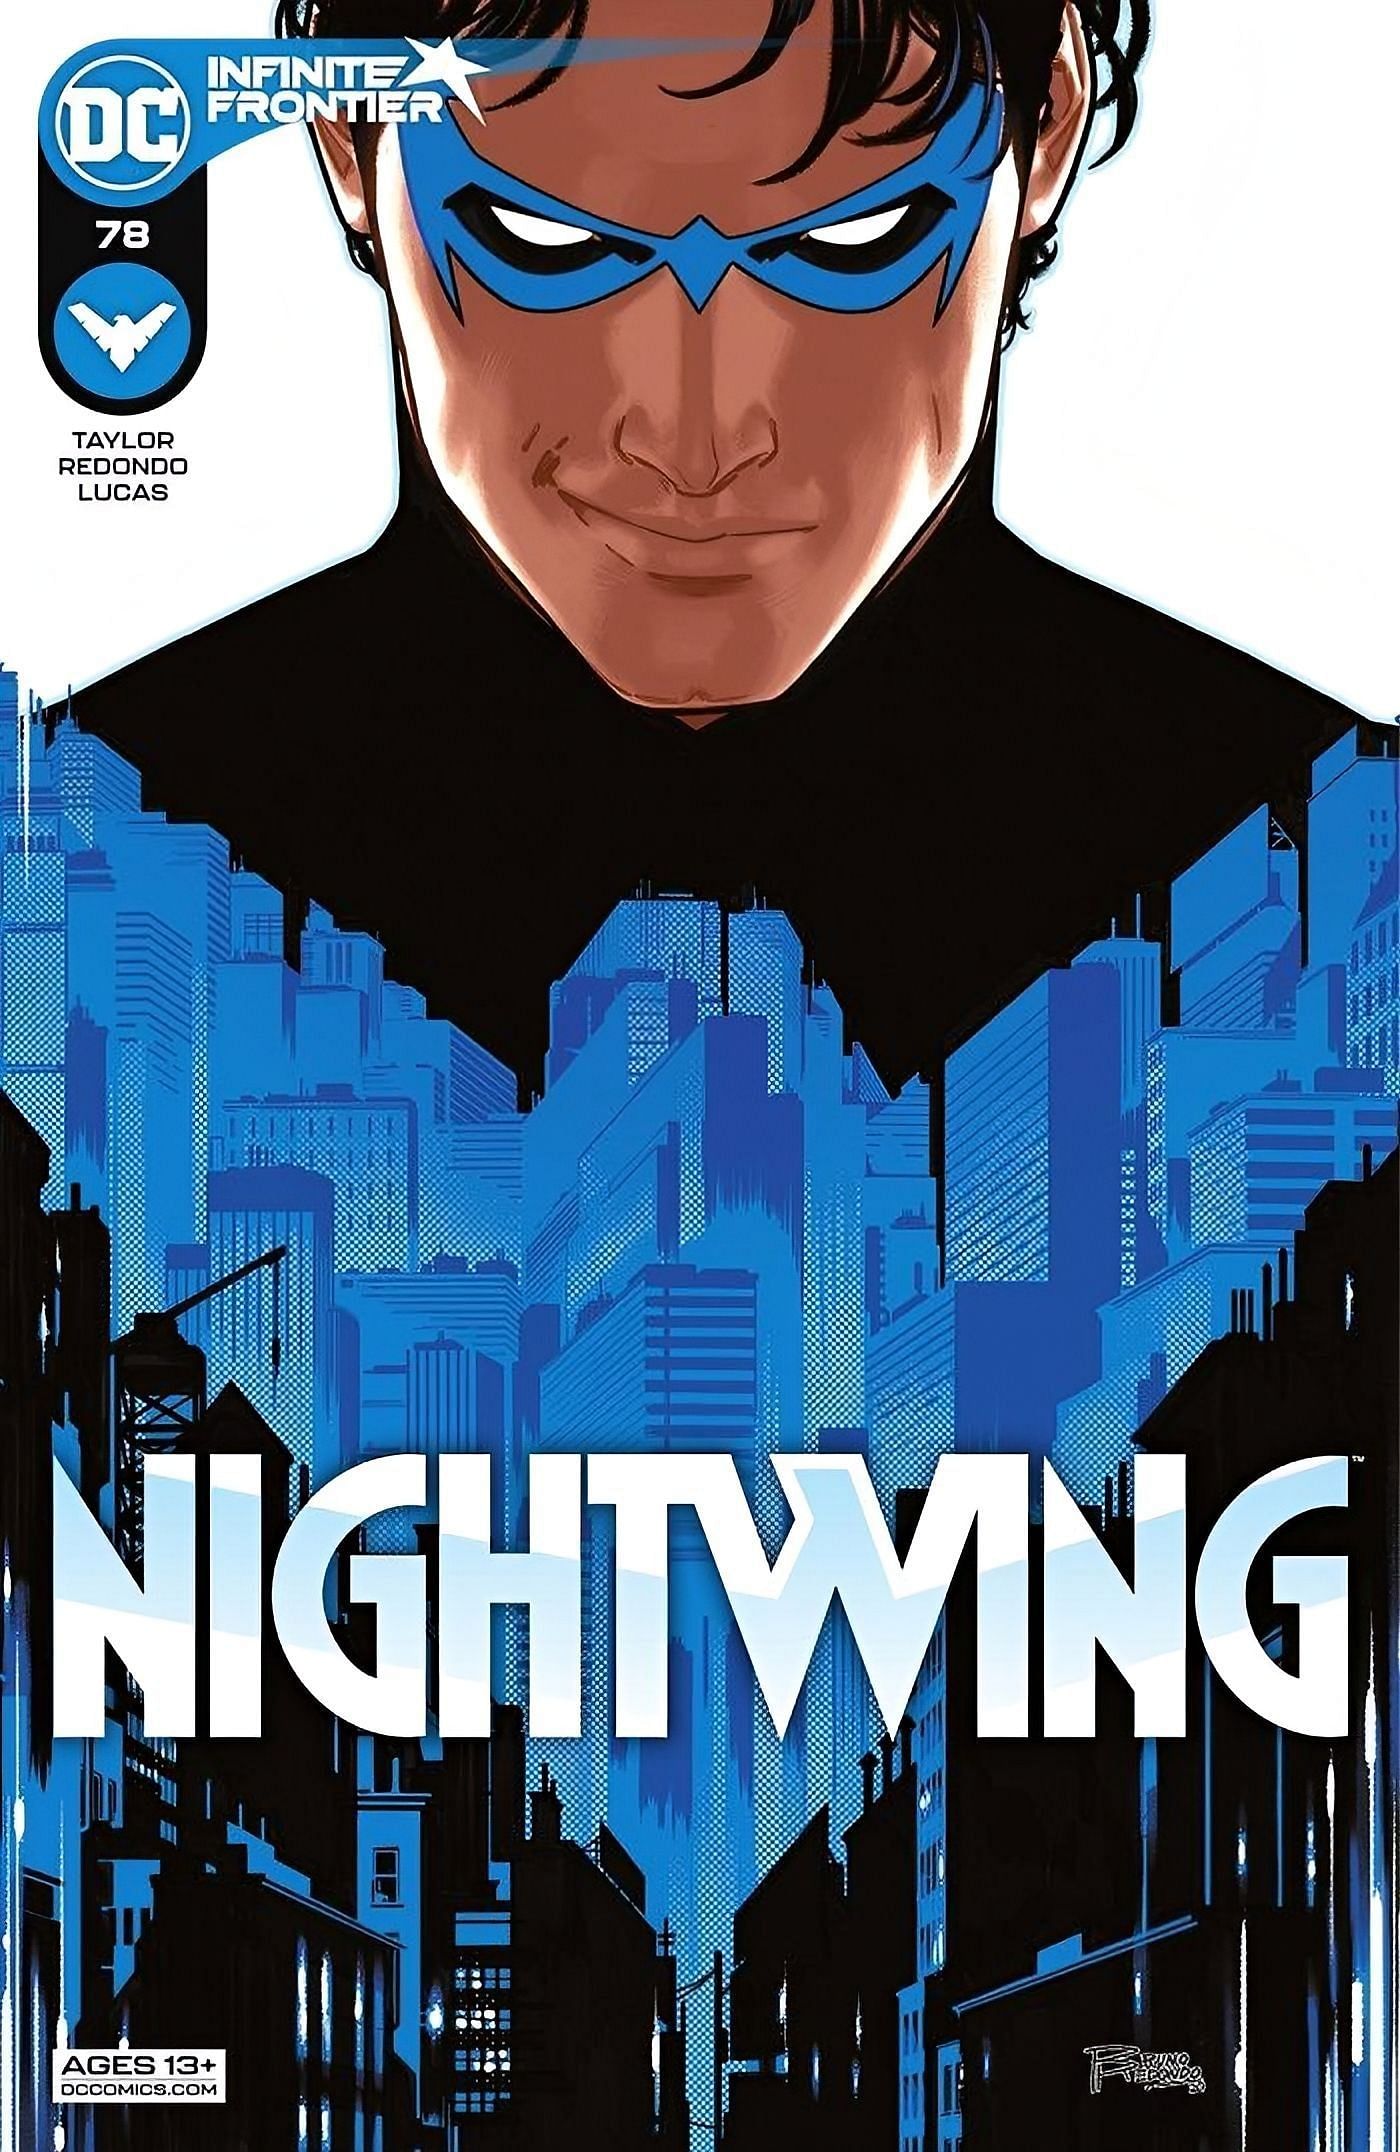 Comic cover (Image via DC Comics)